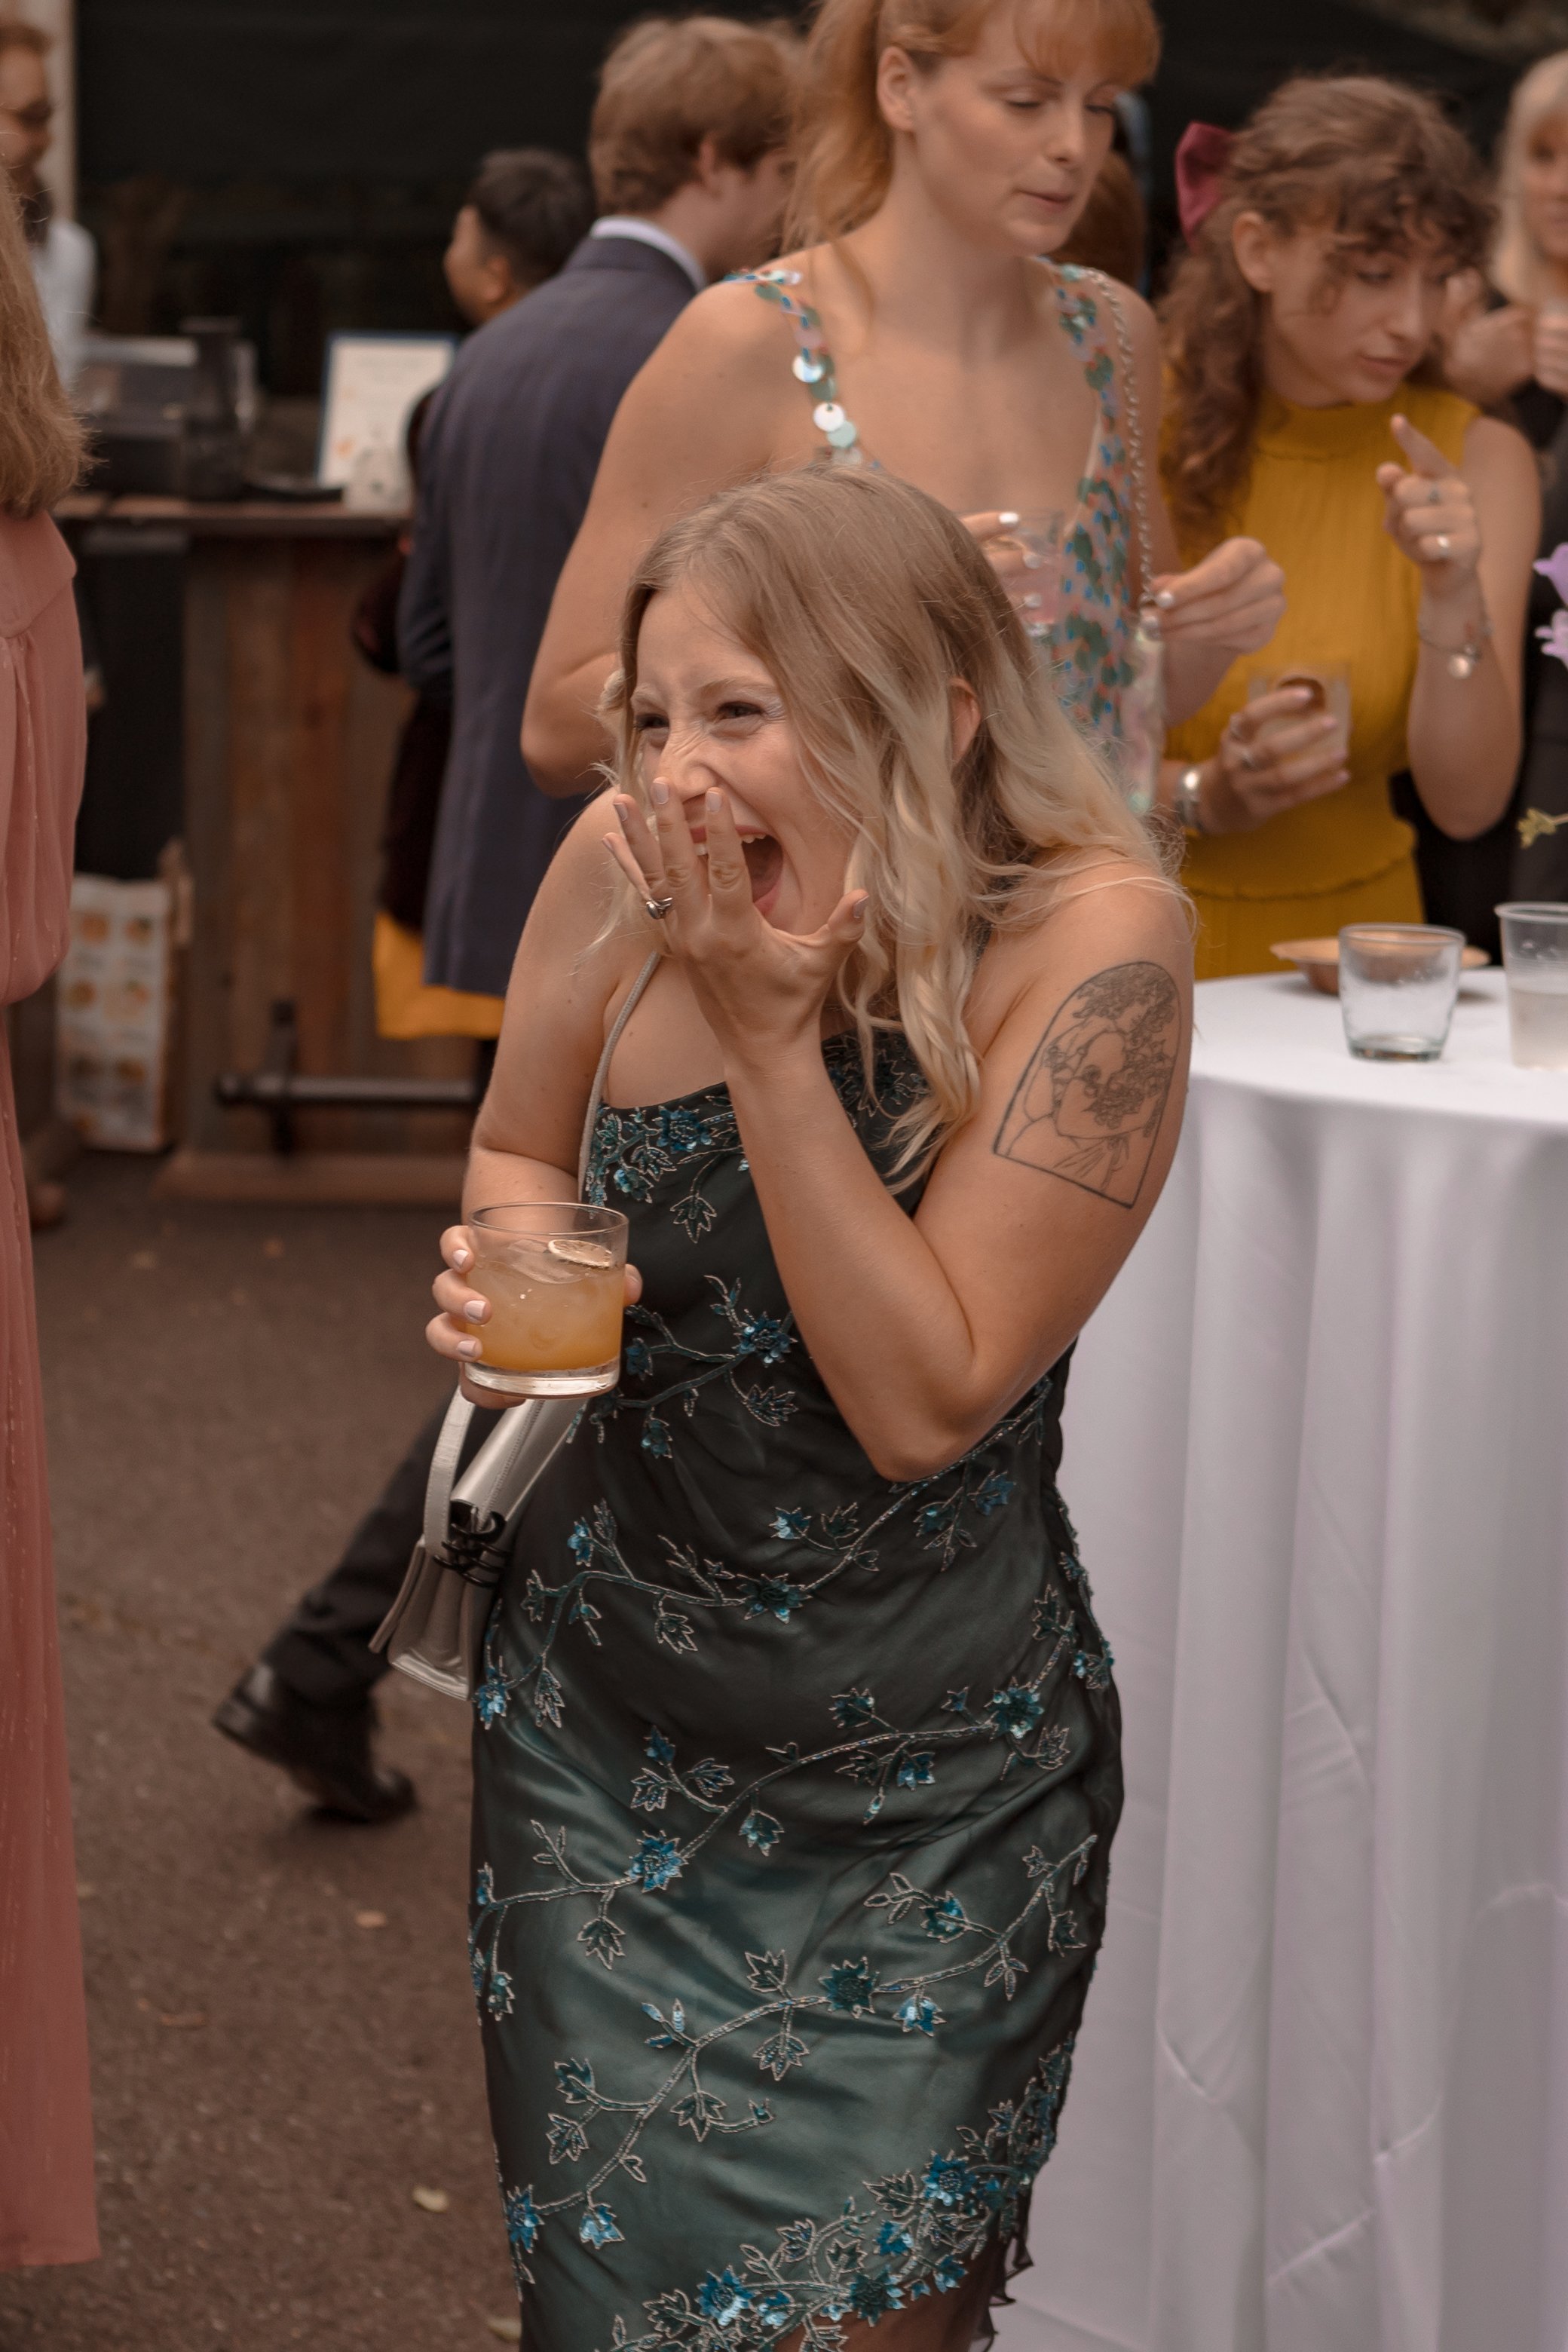 Joyful Candid Moment: Bride's Friend Laughing at Ridgeland Mansion